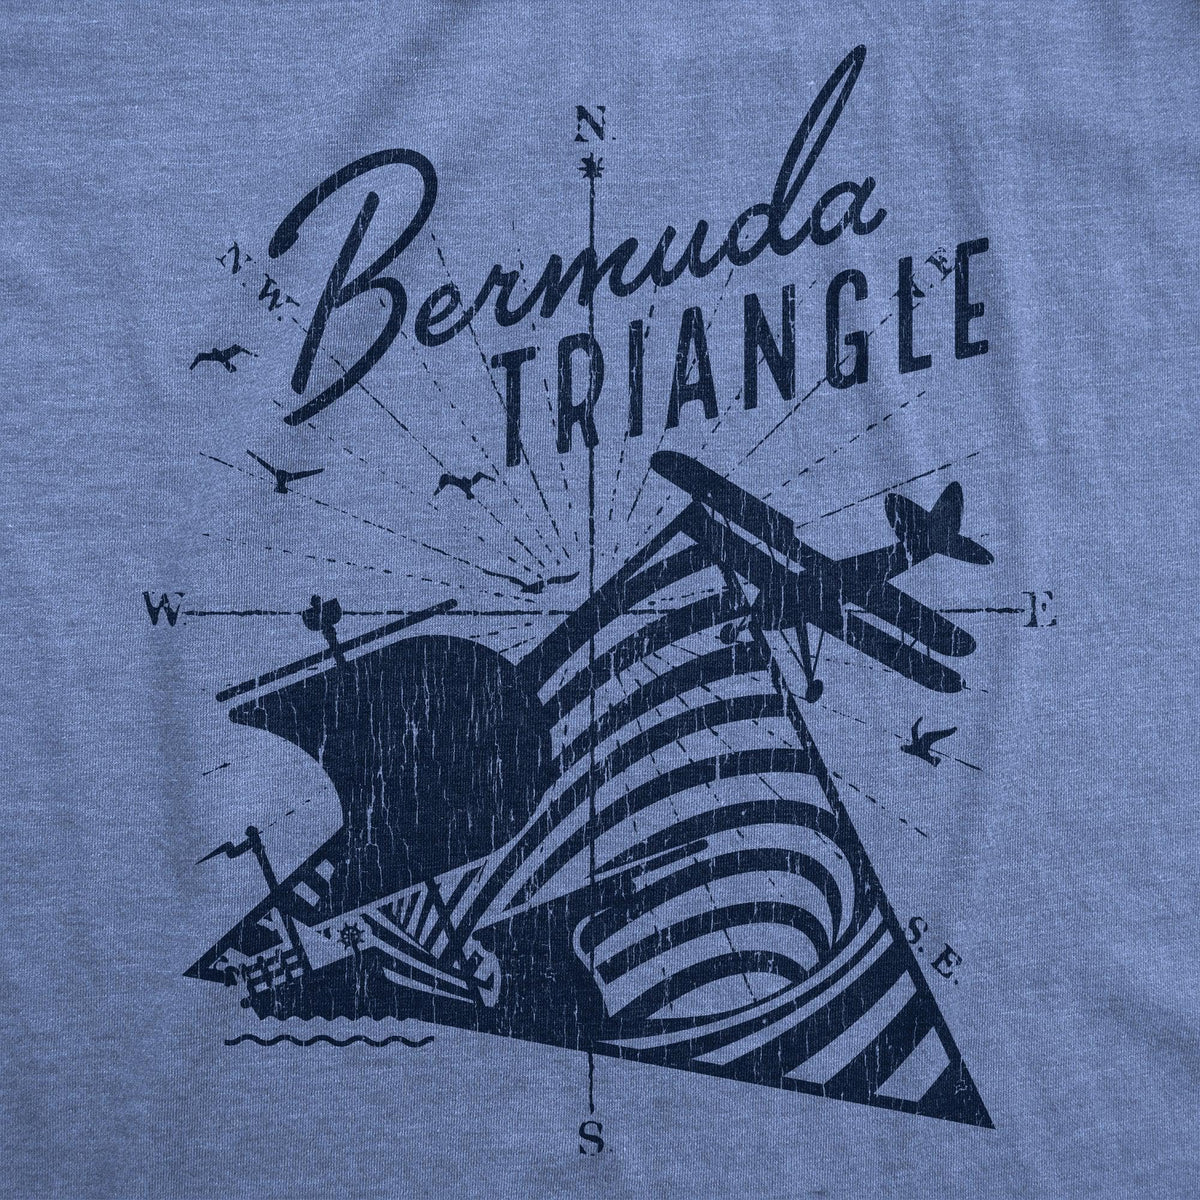 Bermuda Triangle Women&#39;s Tshirt  -  Crazy Dog T-Shirts